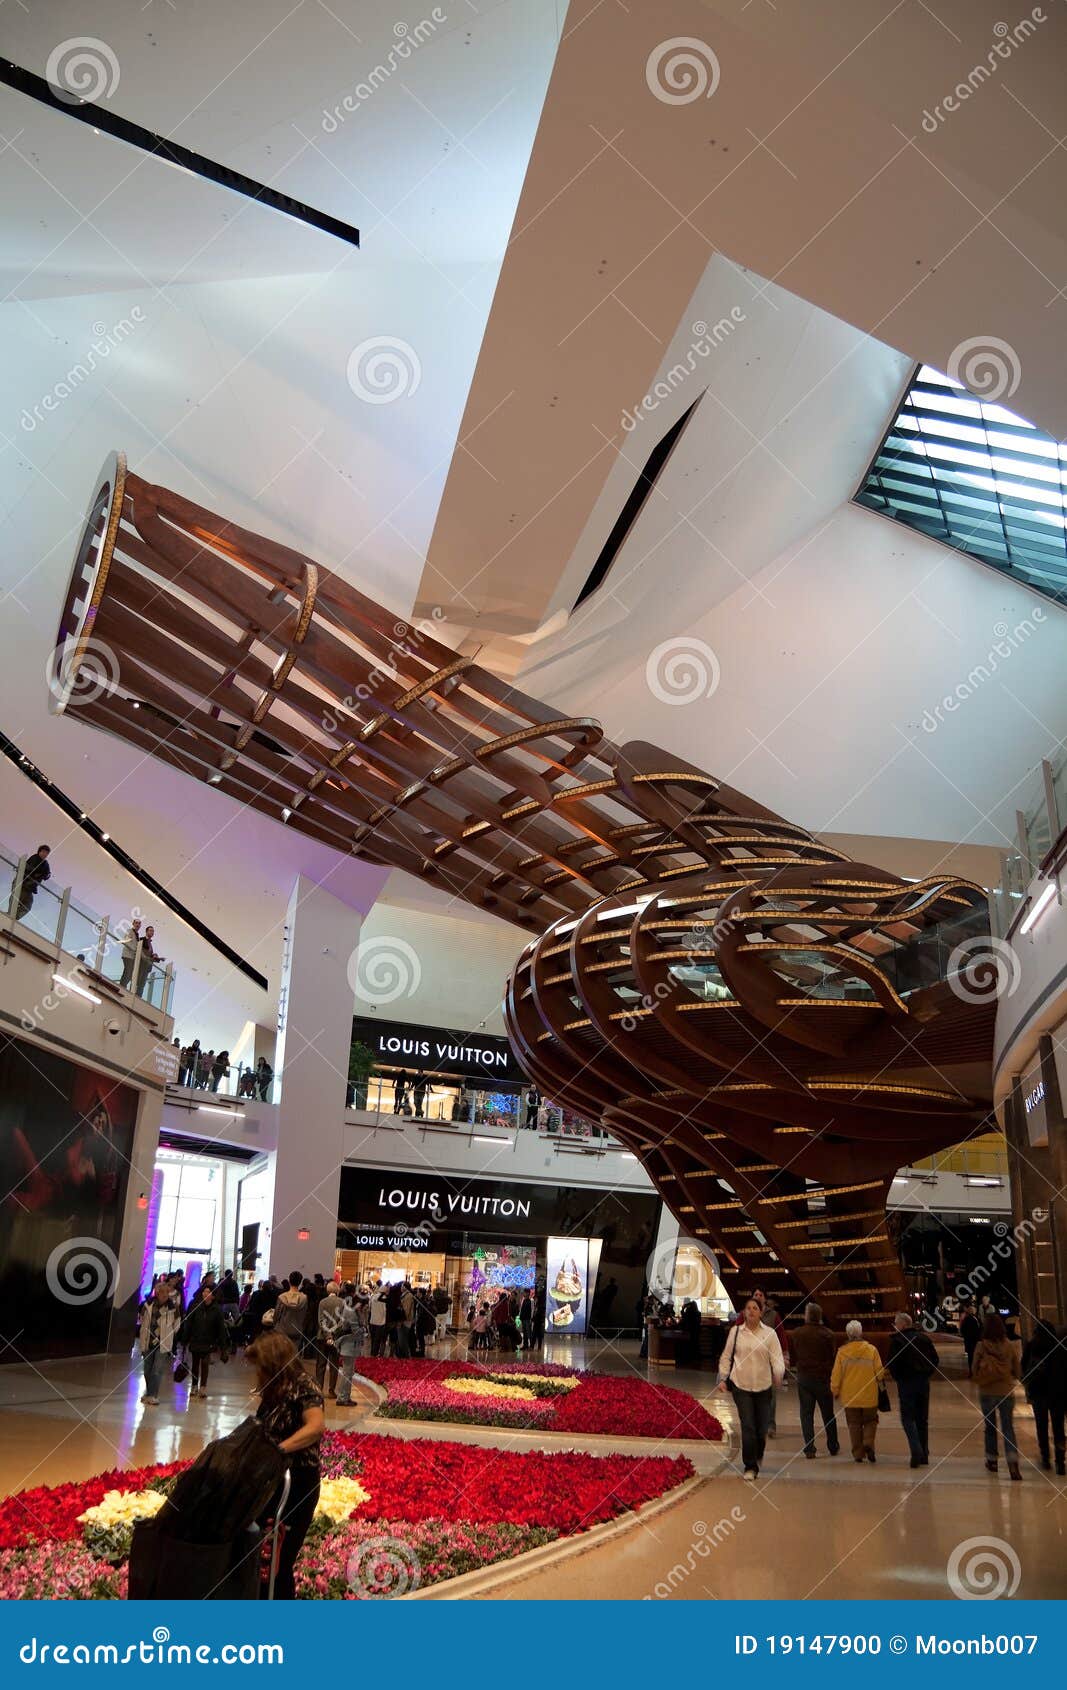 Inside new Louis Vuitton flagship Brisbane store in Queen Street Mall